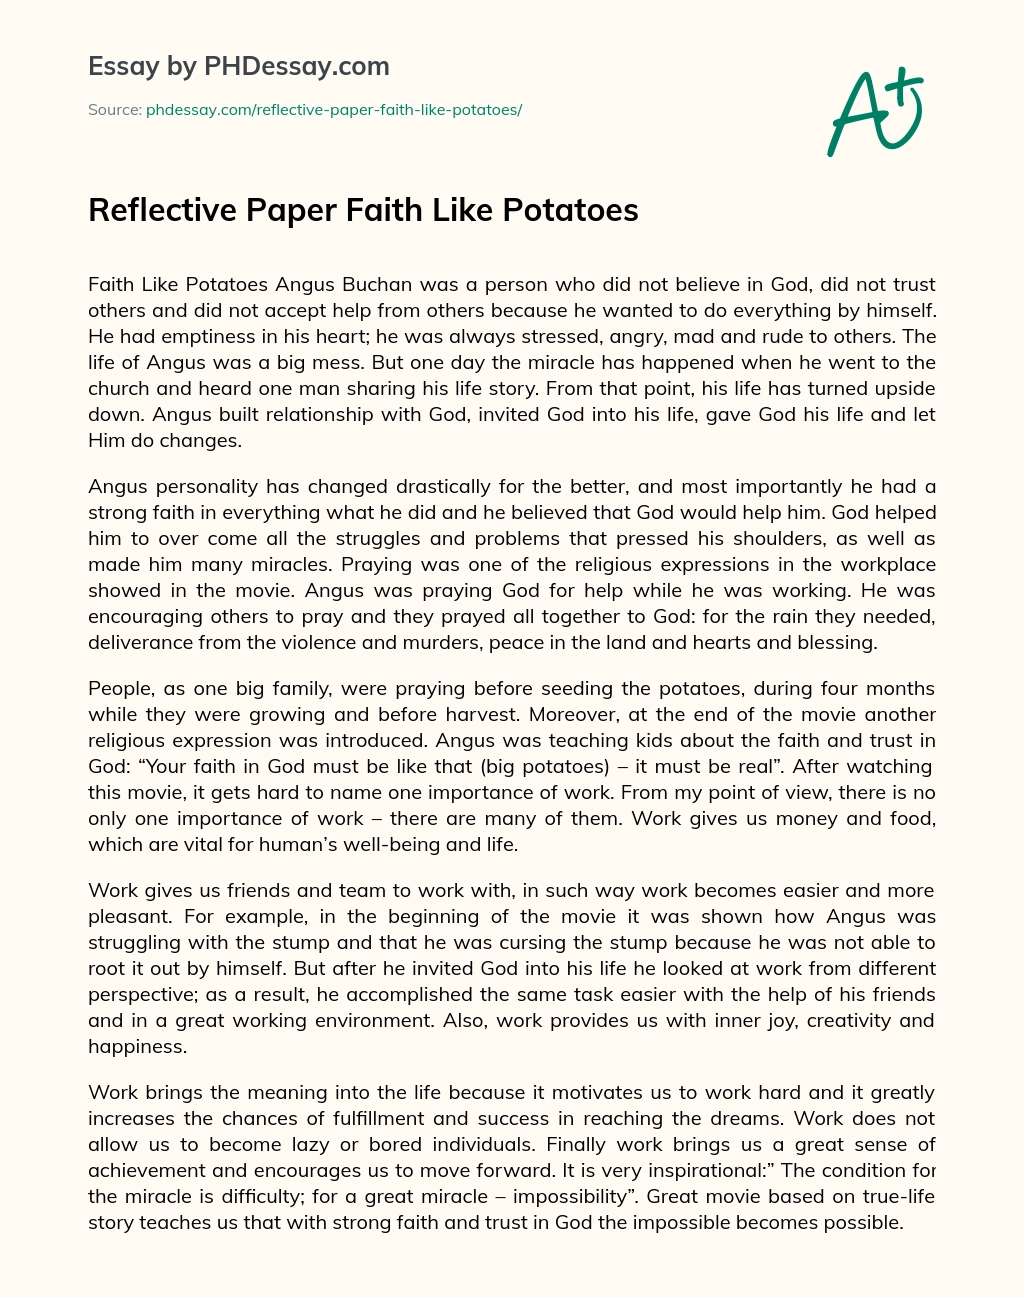 Reflective Paper Faith Like Potatoes essay